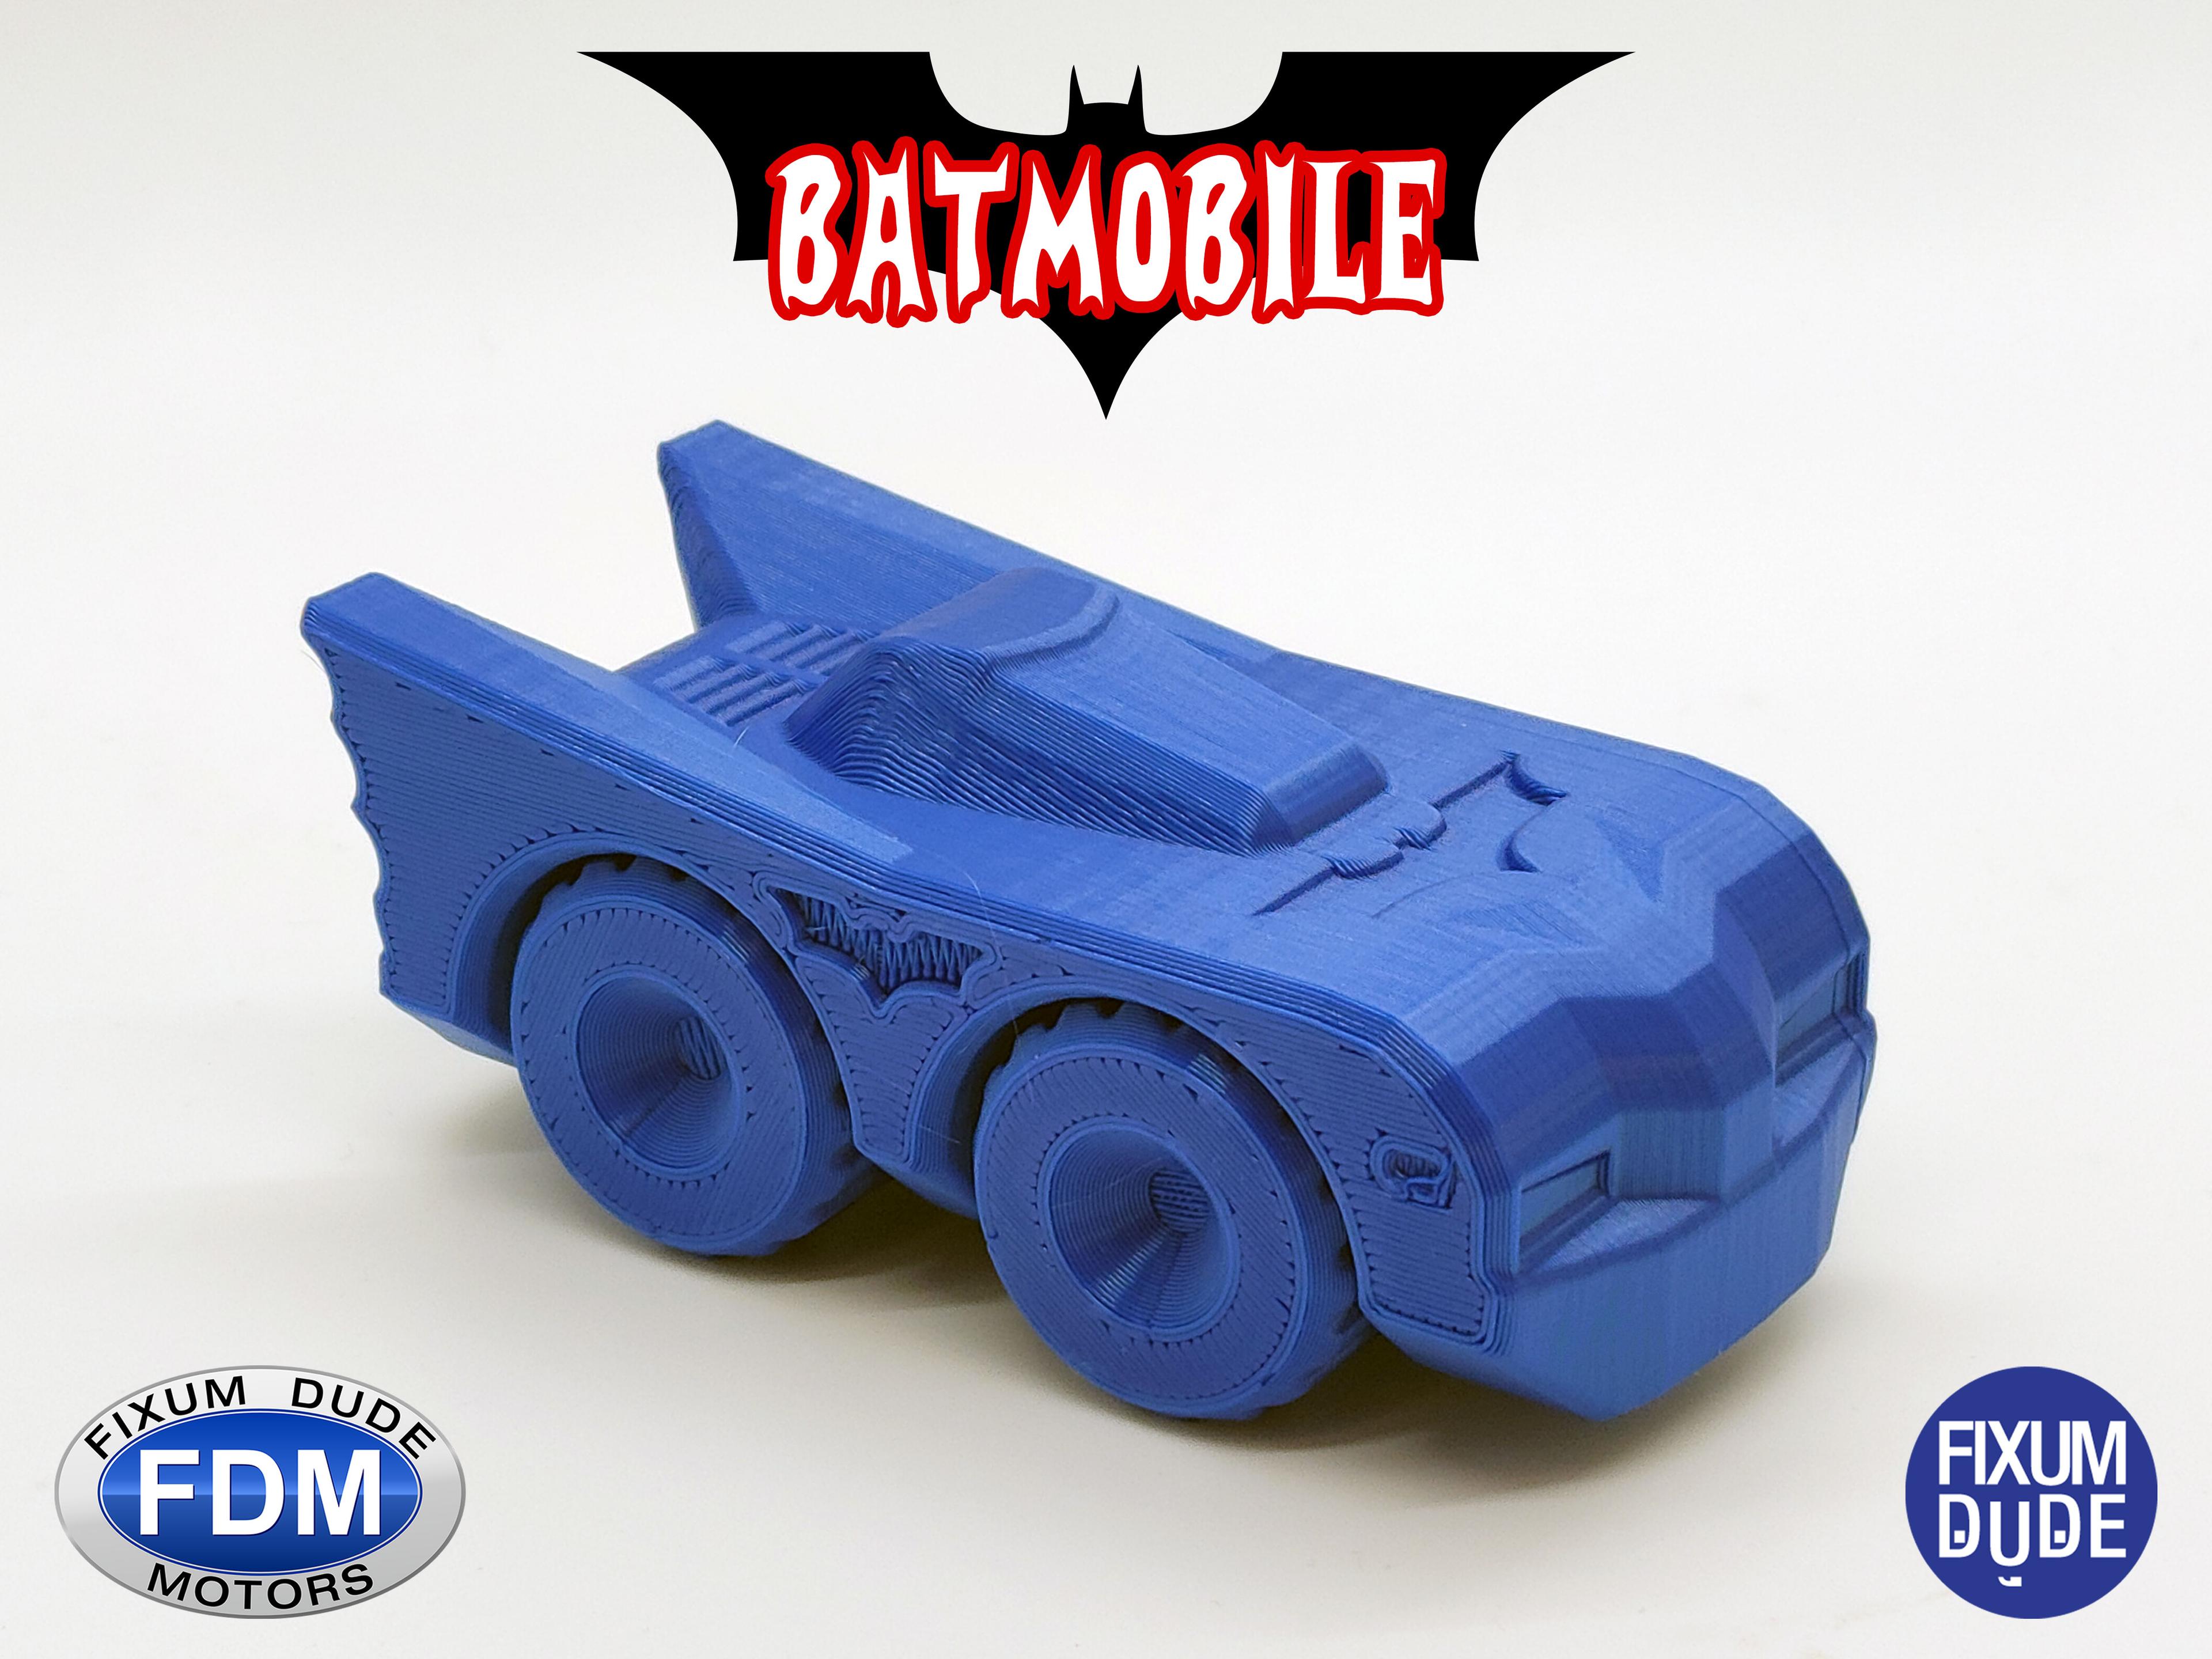 Fixum Dude Motors PiP Batmobile 3d model